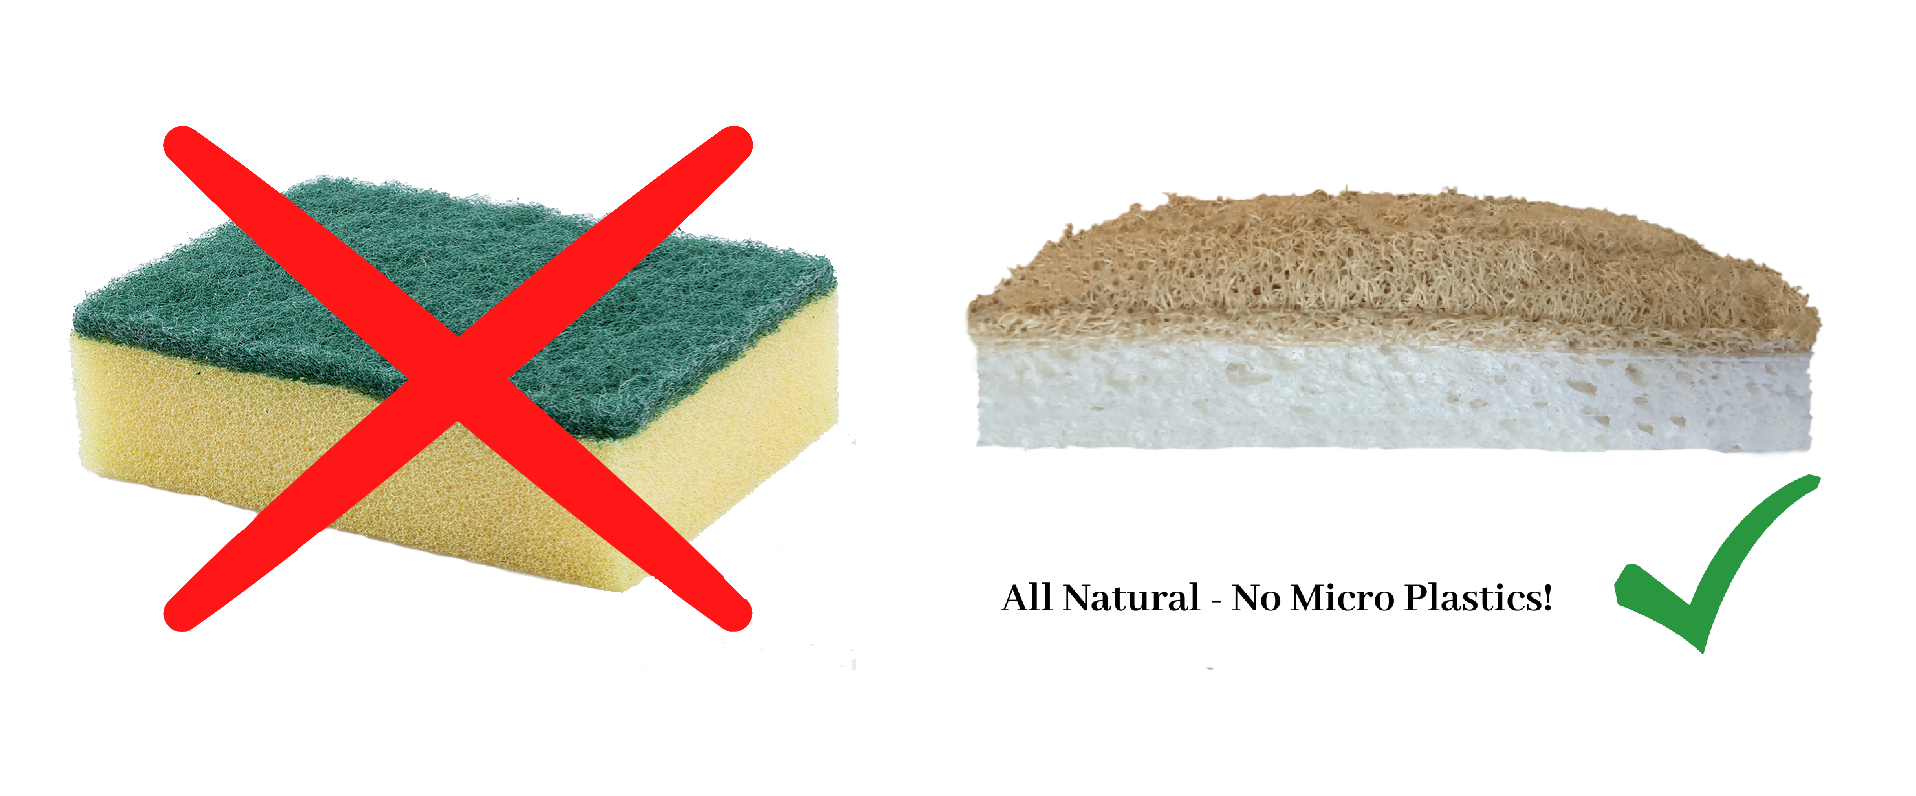 zero waste sponge compared to plastic green & yellow sponge